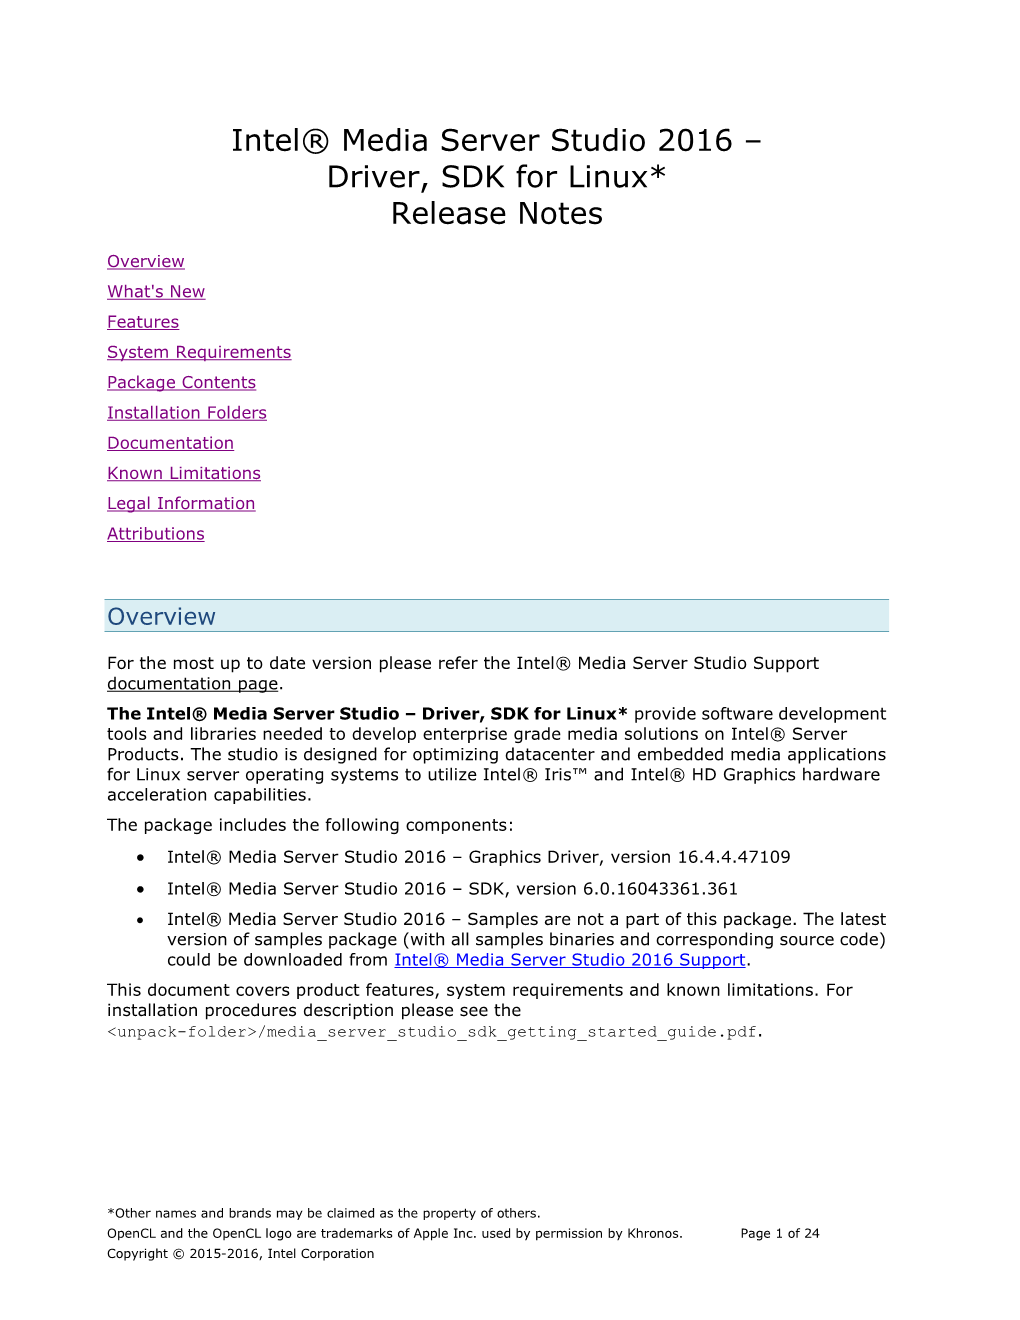 Intel® Media Server Studio 2016 – Driver, SDK for Linux* Release Notes